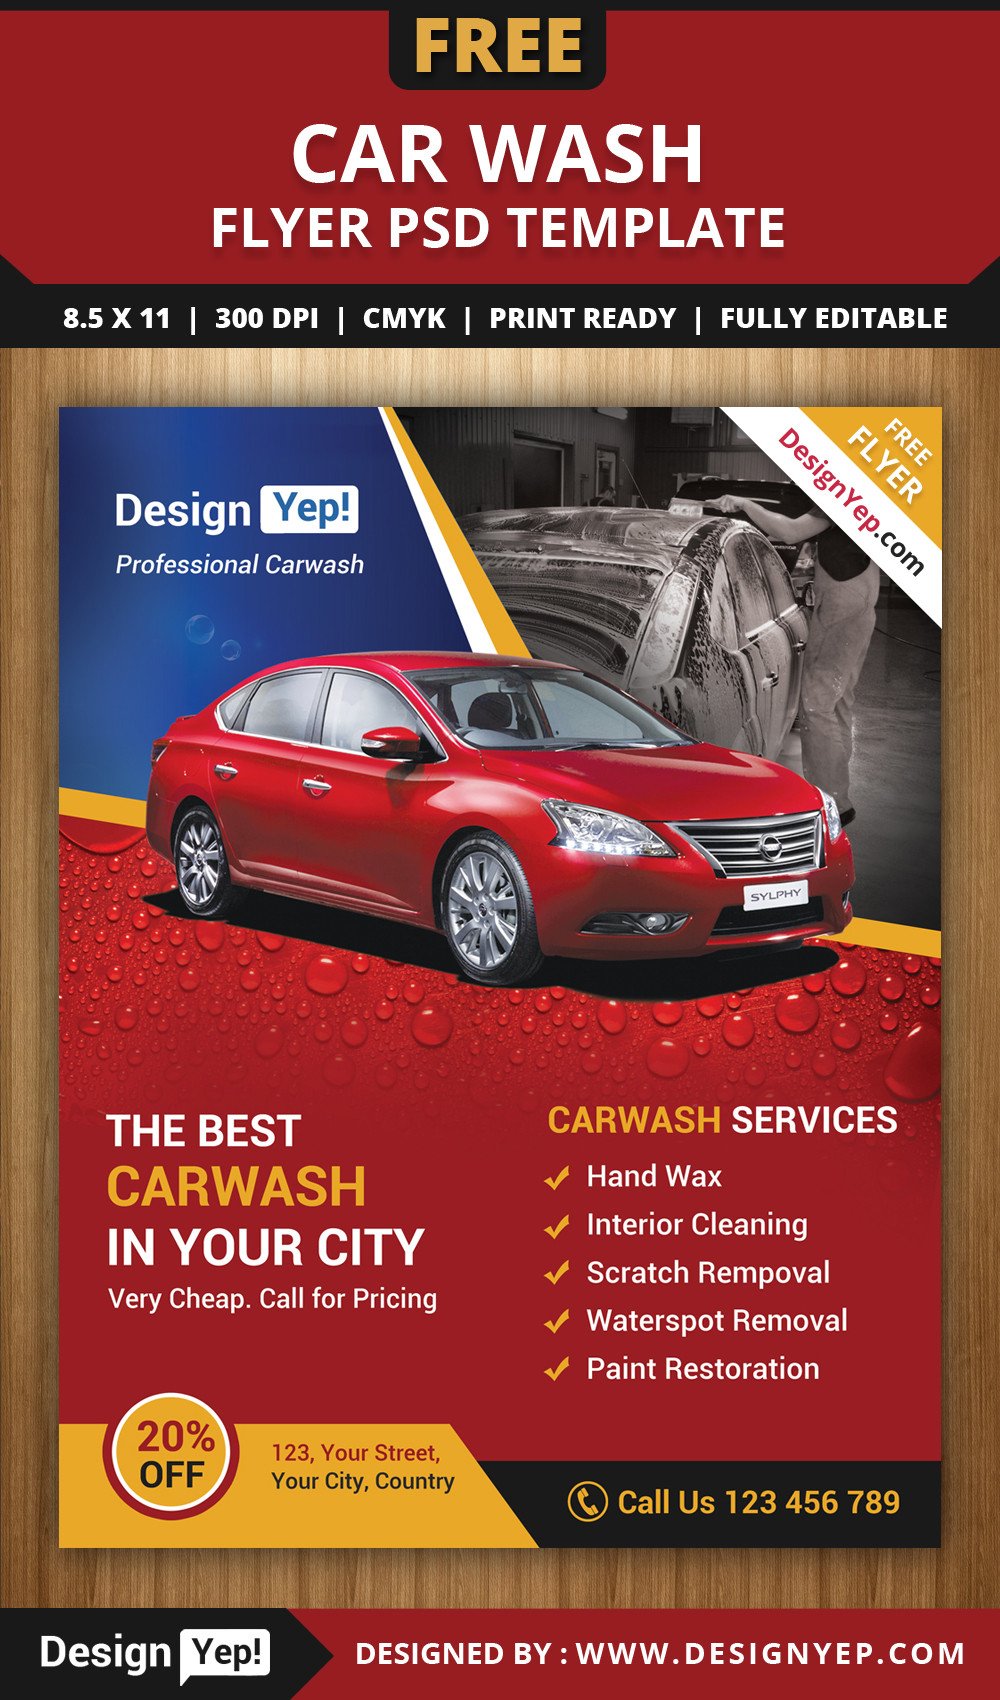 Free Car Wash Flyer PSD Template DesignYep